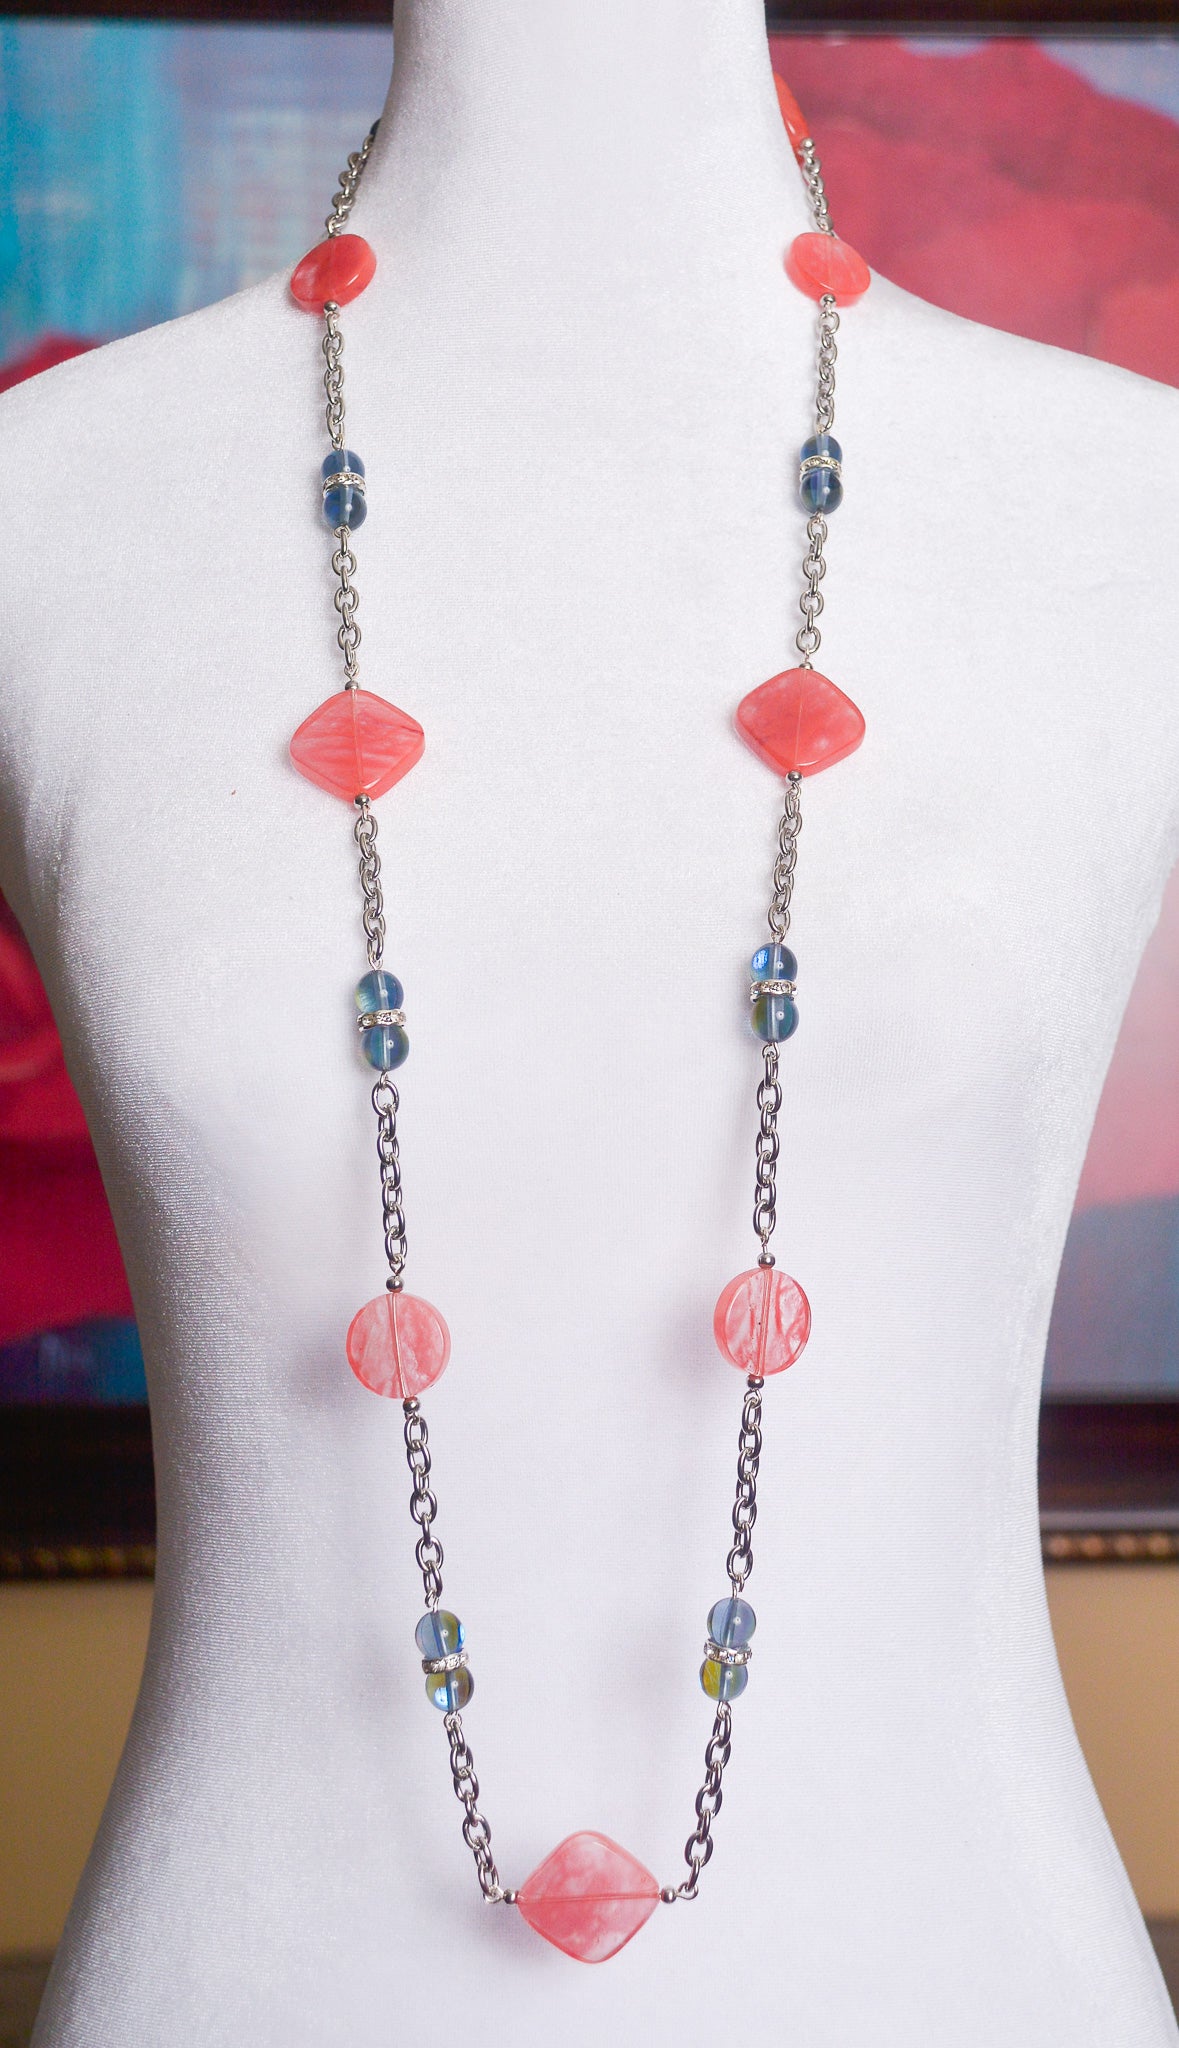 Celestial Harmony Necklace with Blue Mystic Quartz & Strawberry Quartz